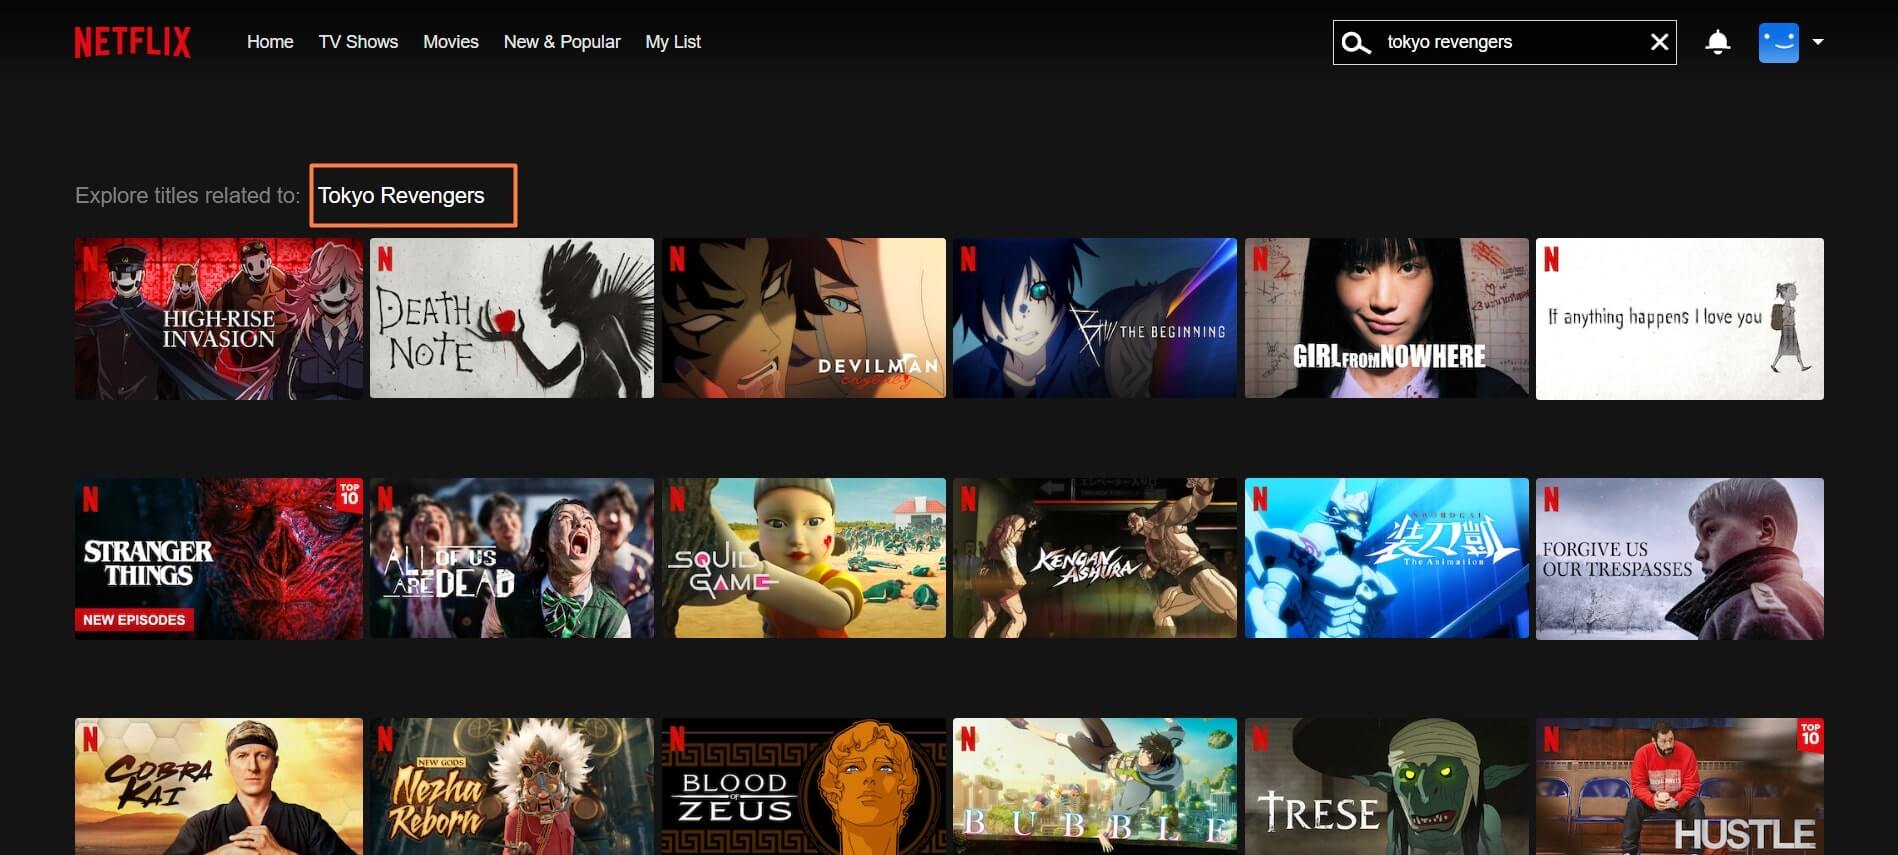 Tokyo Revengers not on Netflix